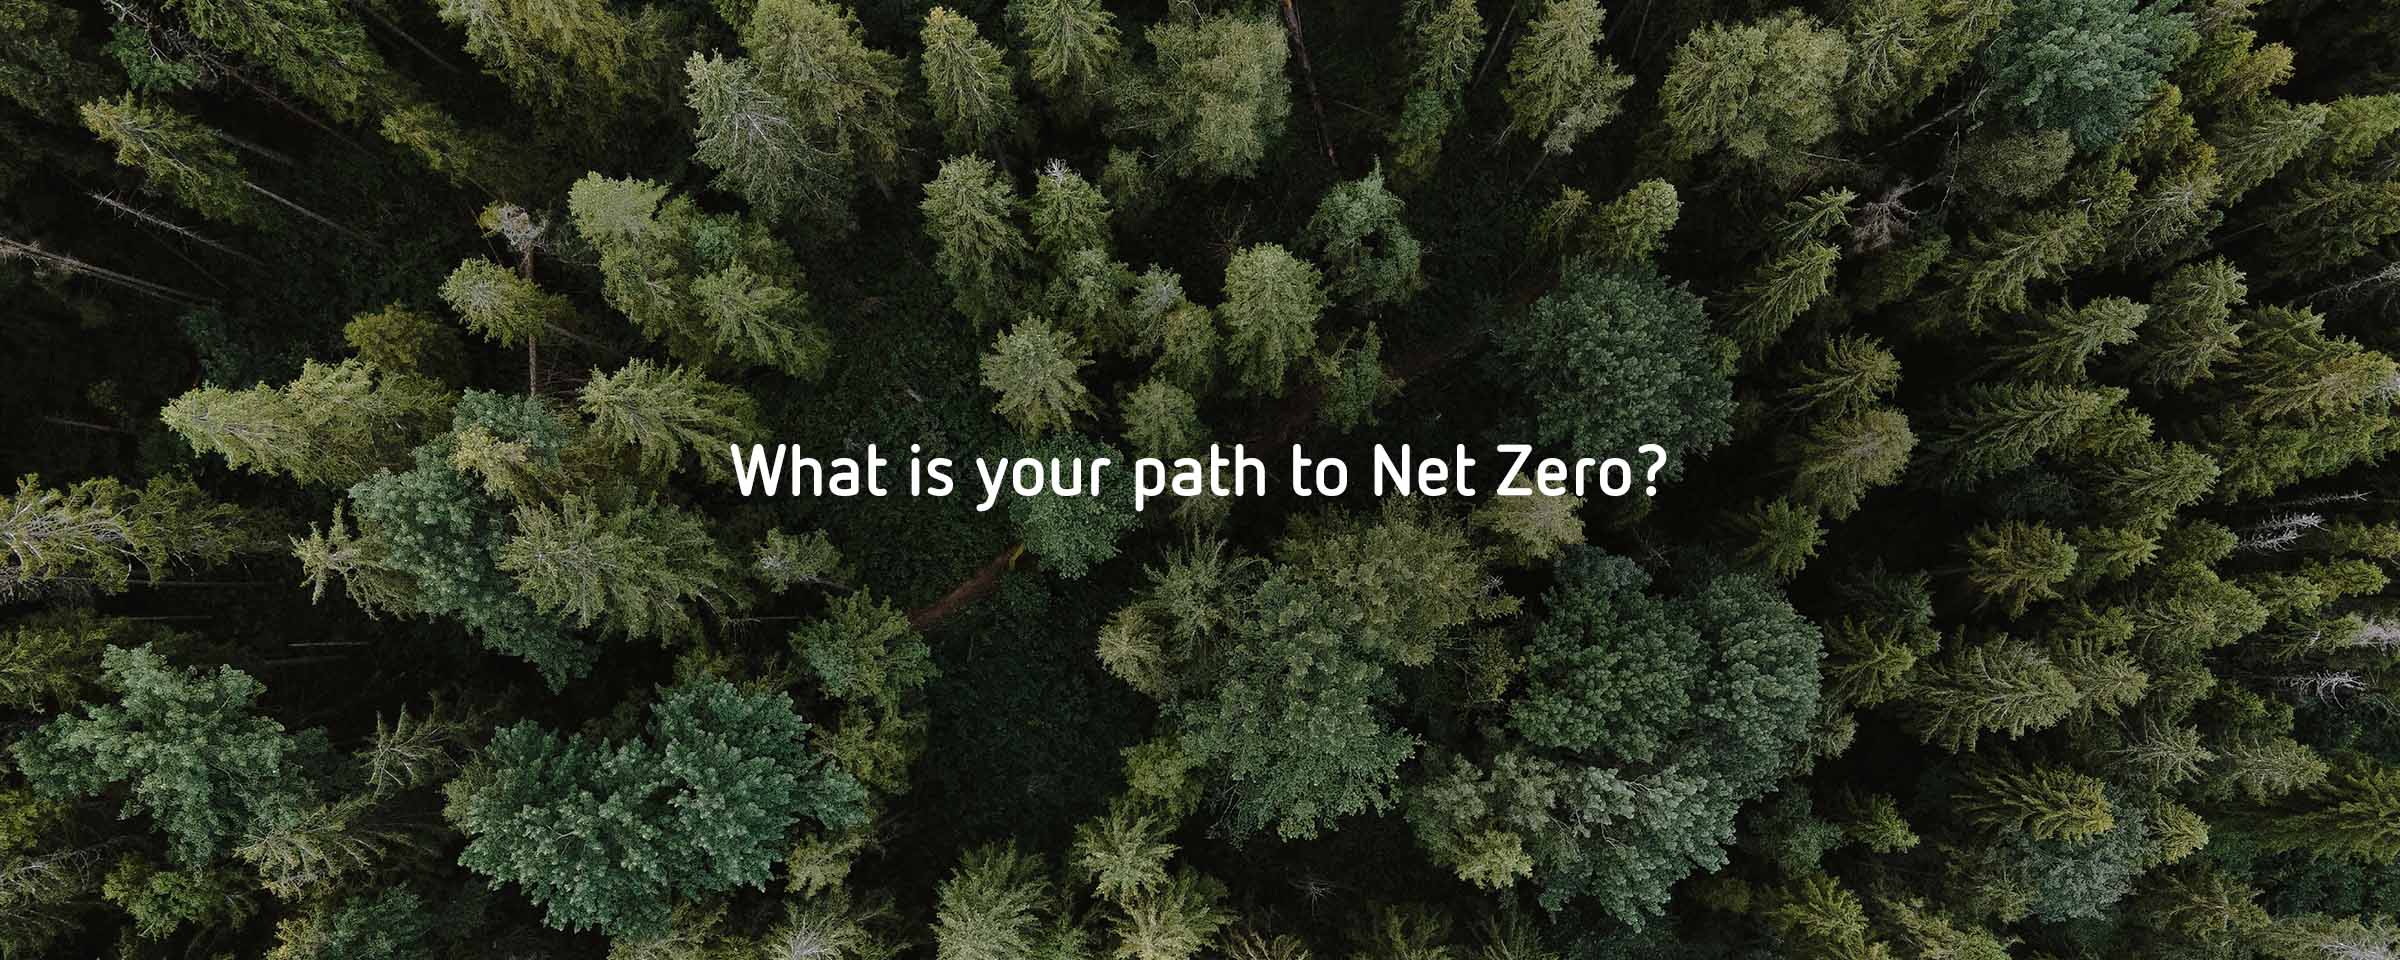 Net Zero with Intuity